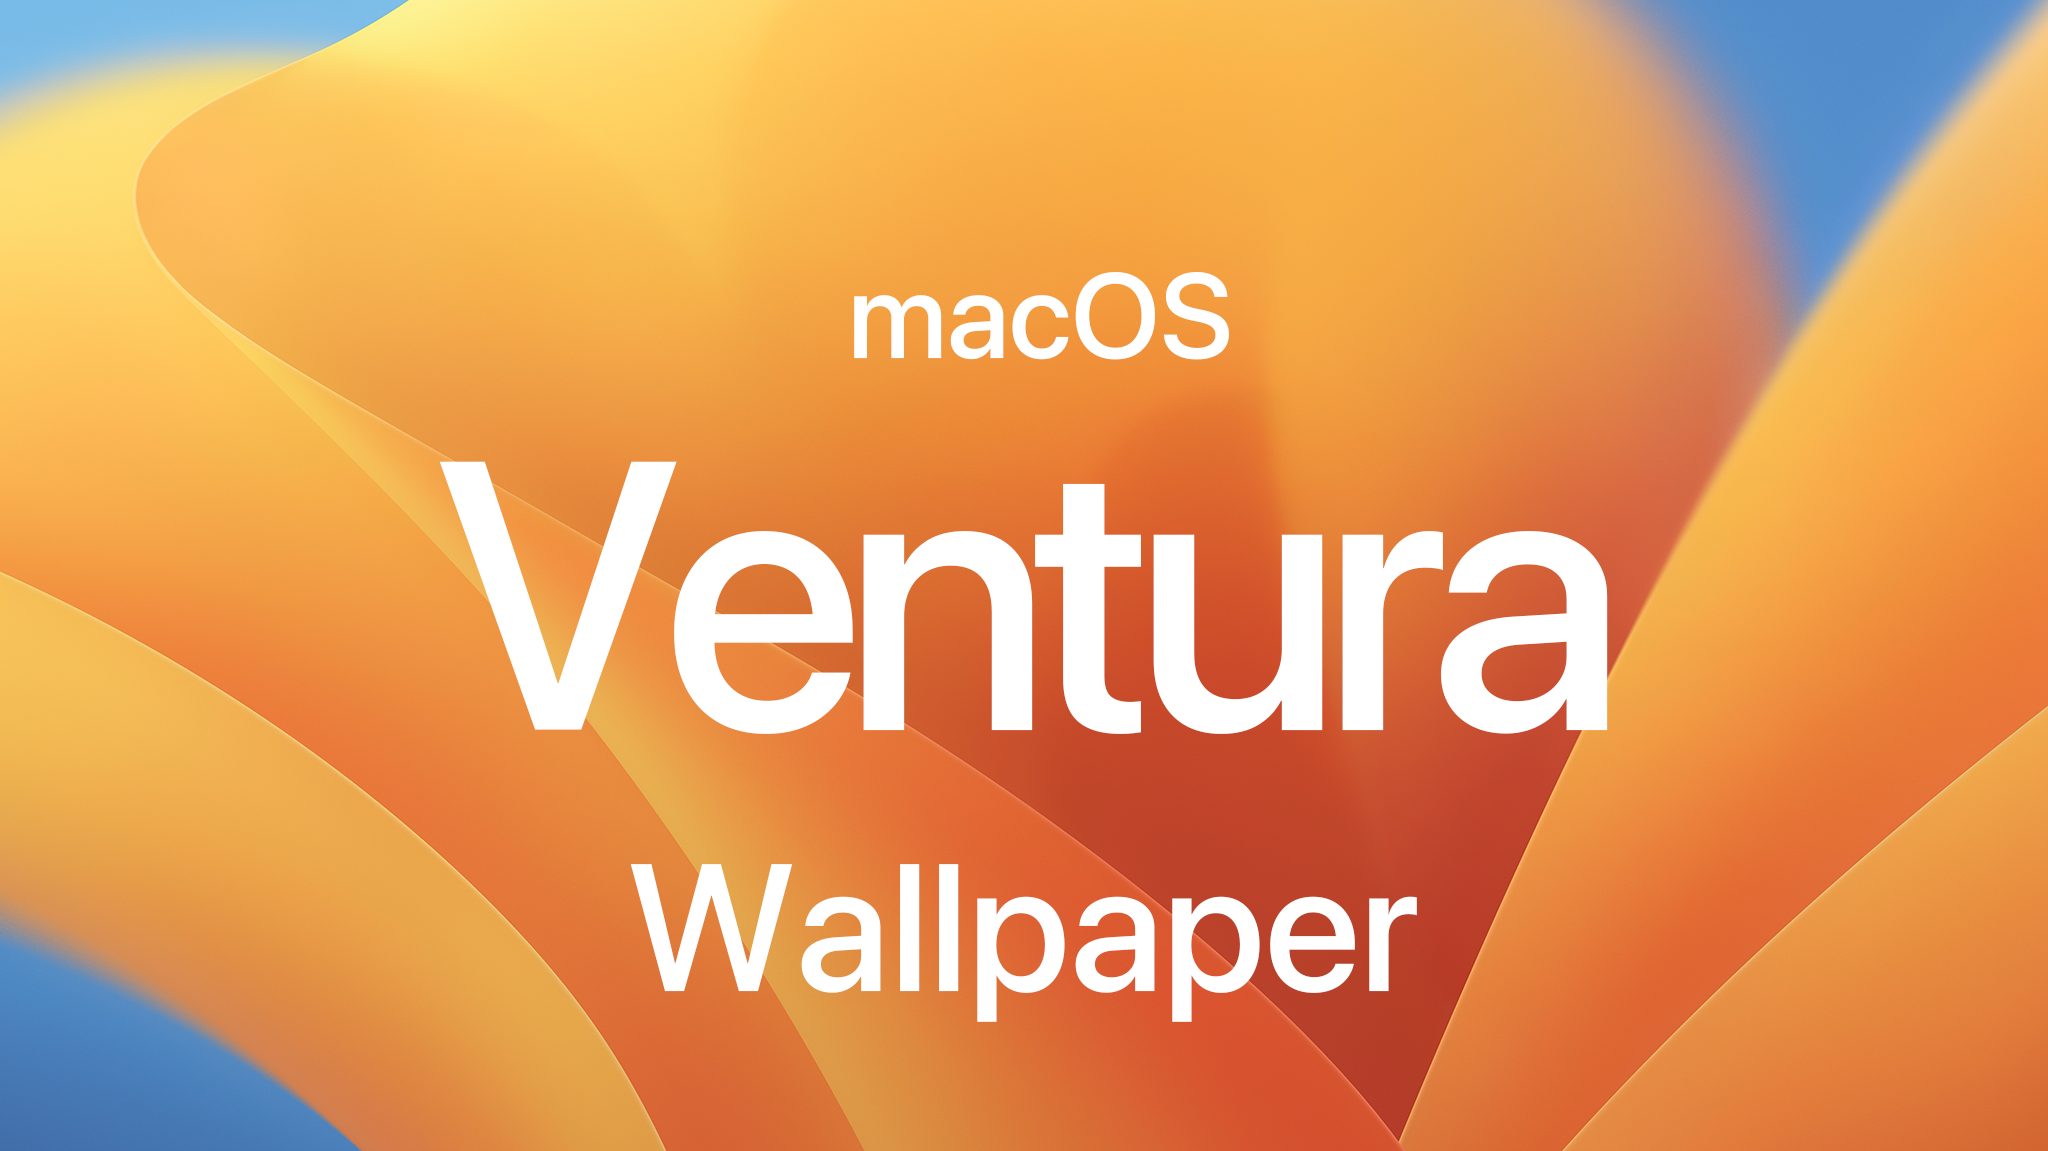 macOS Ventura Wallpaper - cync.